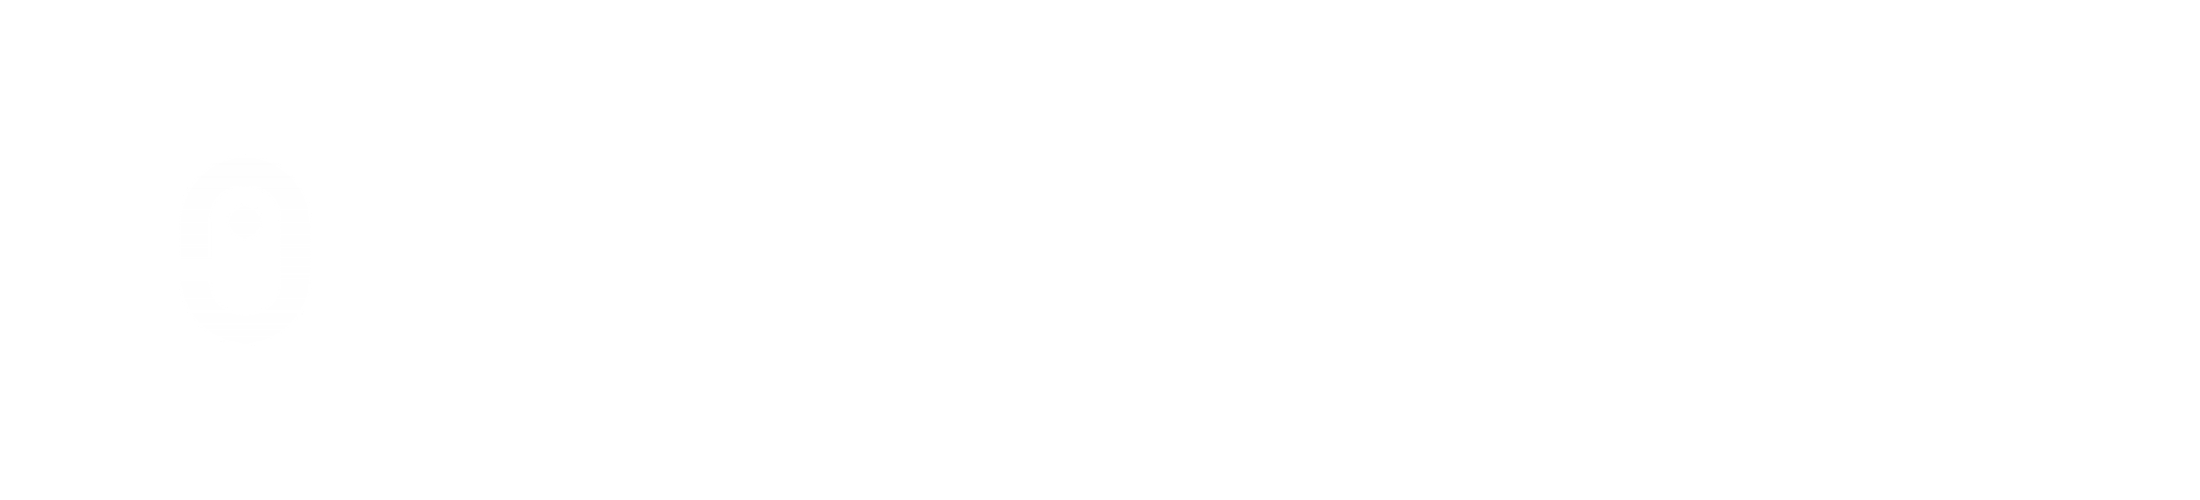 Nuage-Logos-Updated-Alt-White